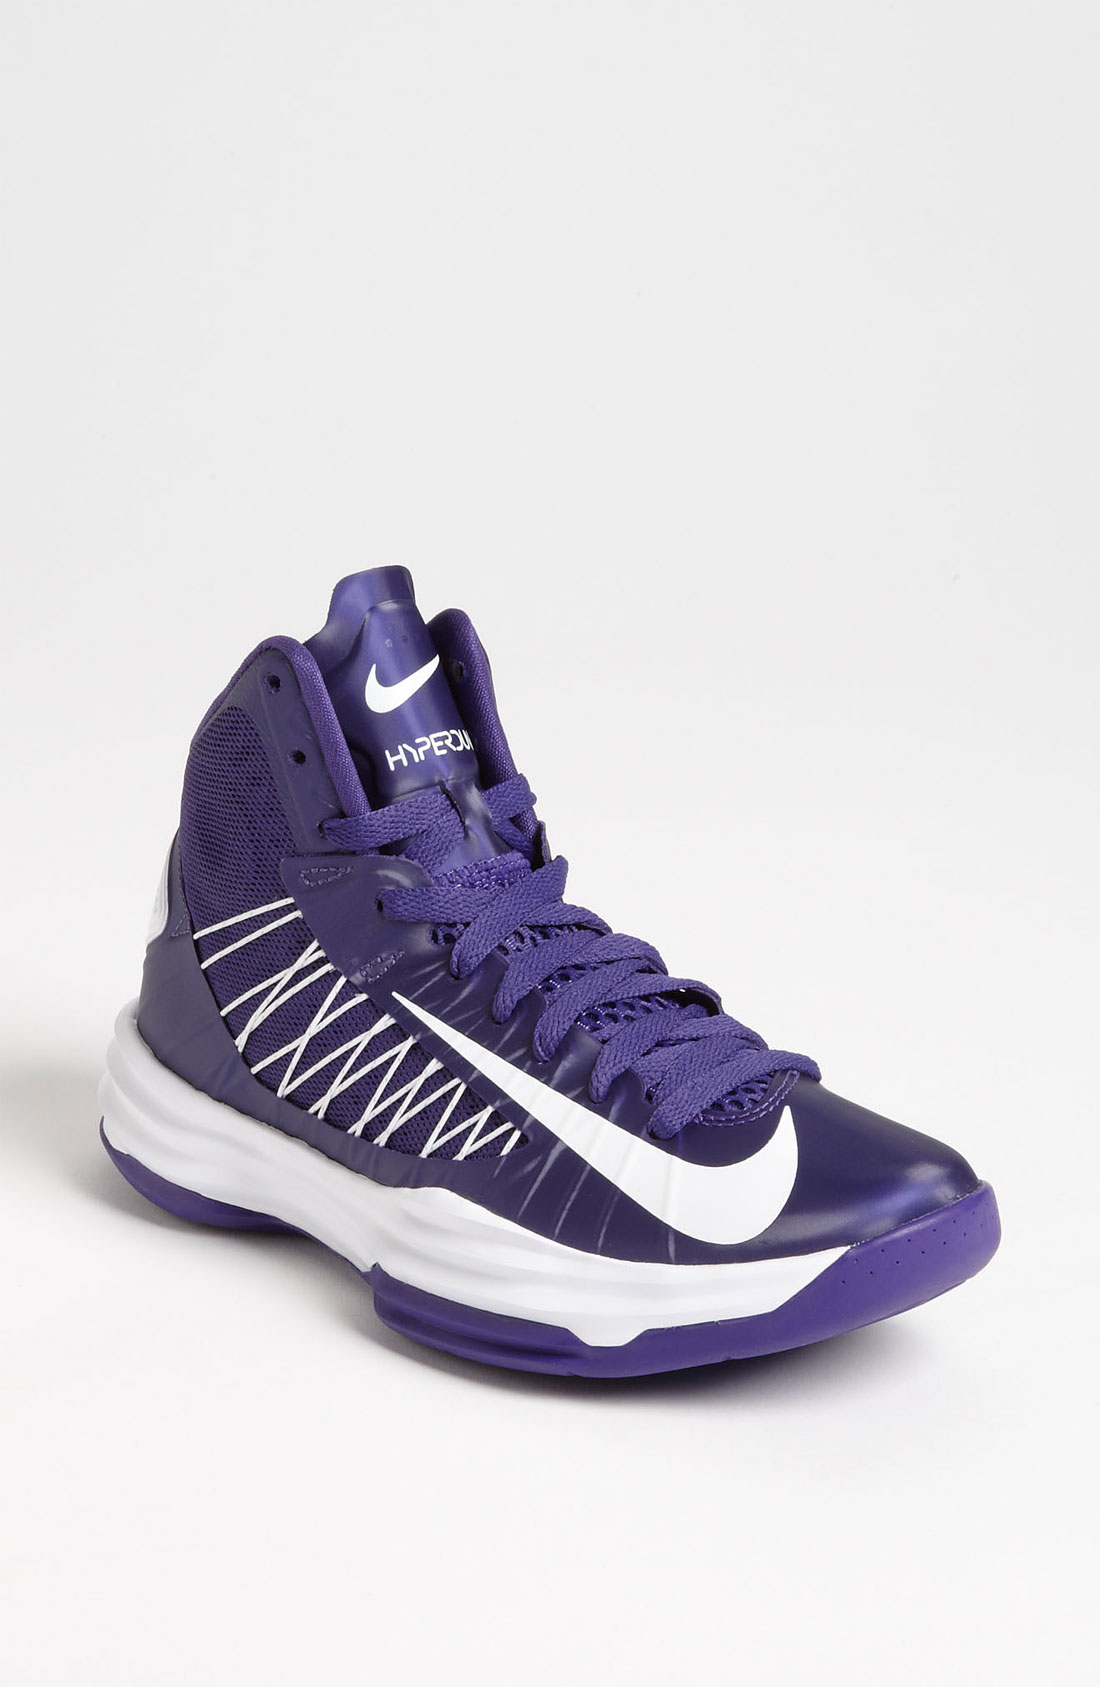 Nike Lunar Hyperdunk Basketball Shoe in Purple (court